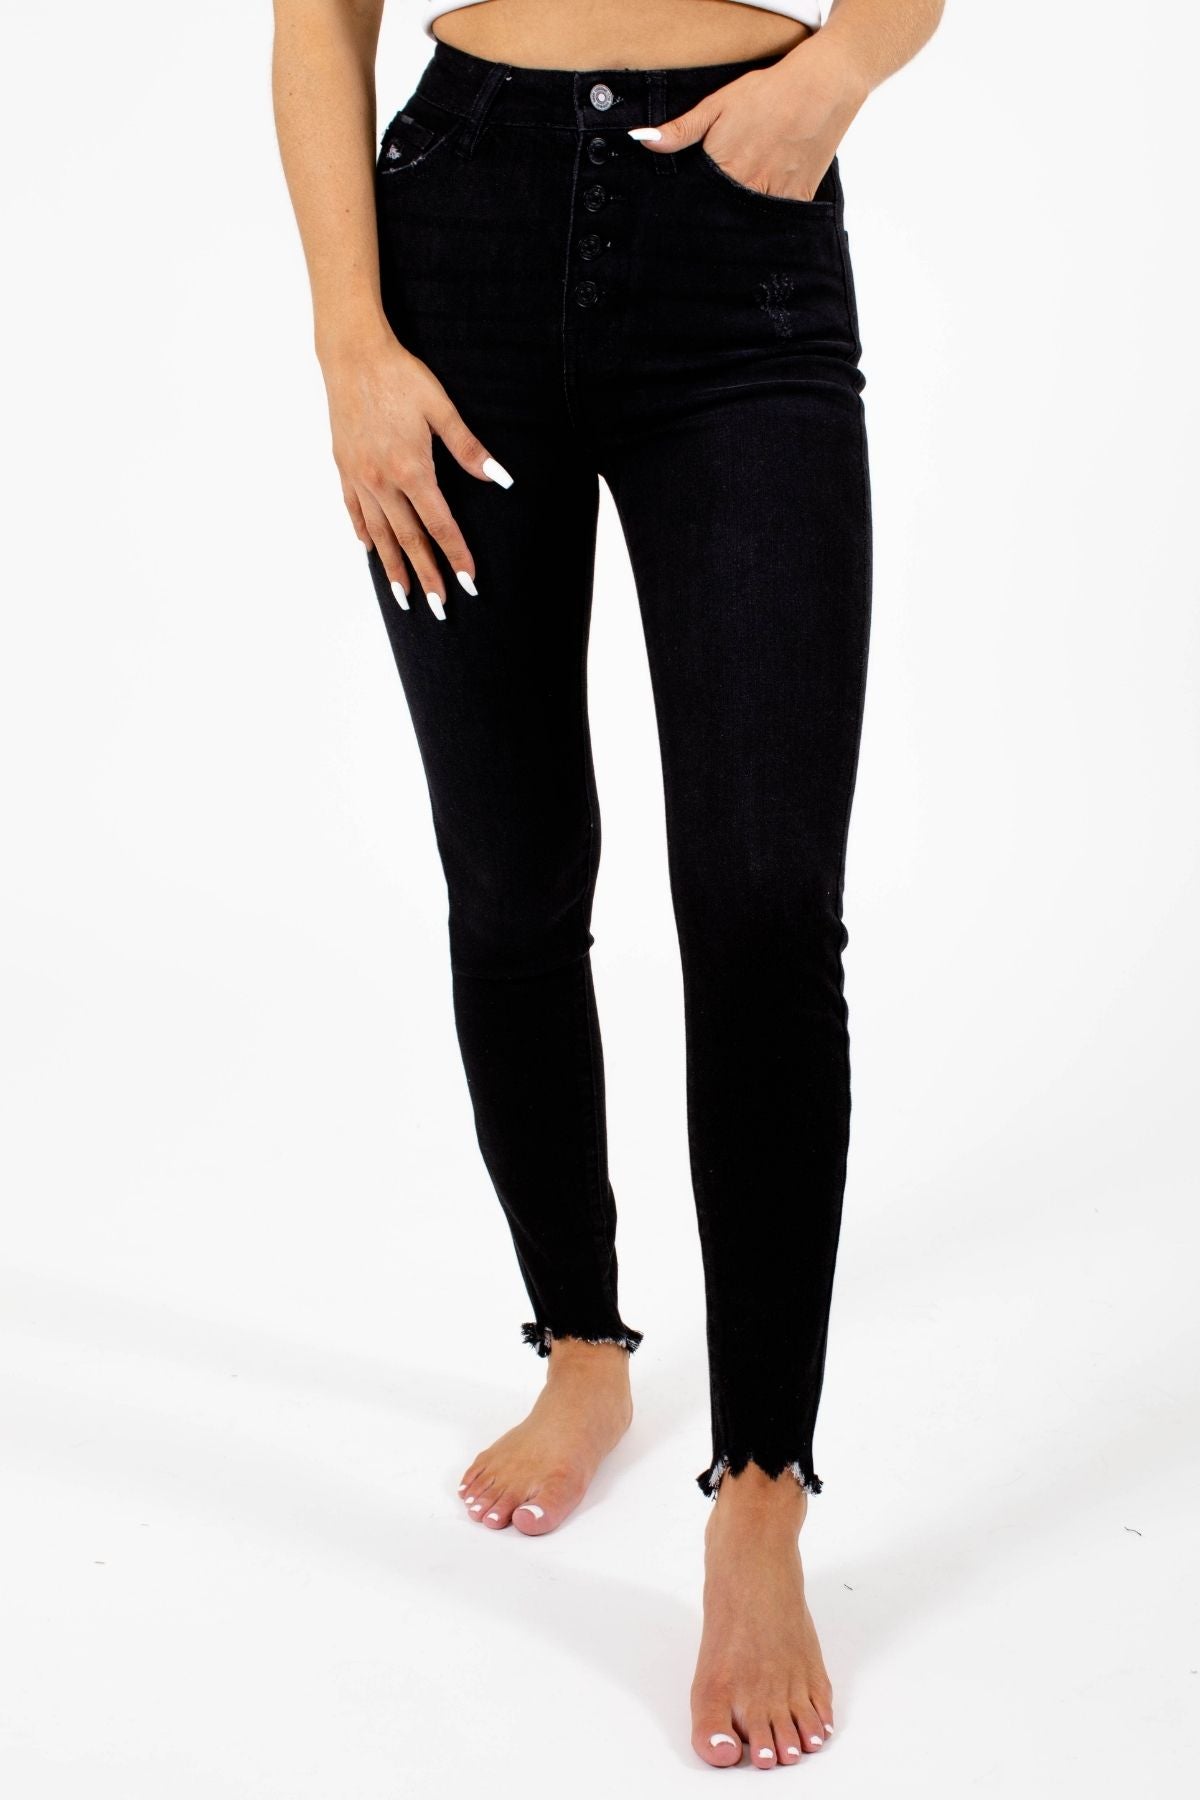 Black Denim Jeans from Bella Ella Boutique.